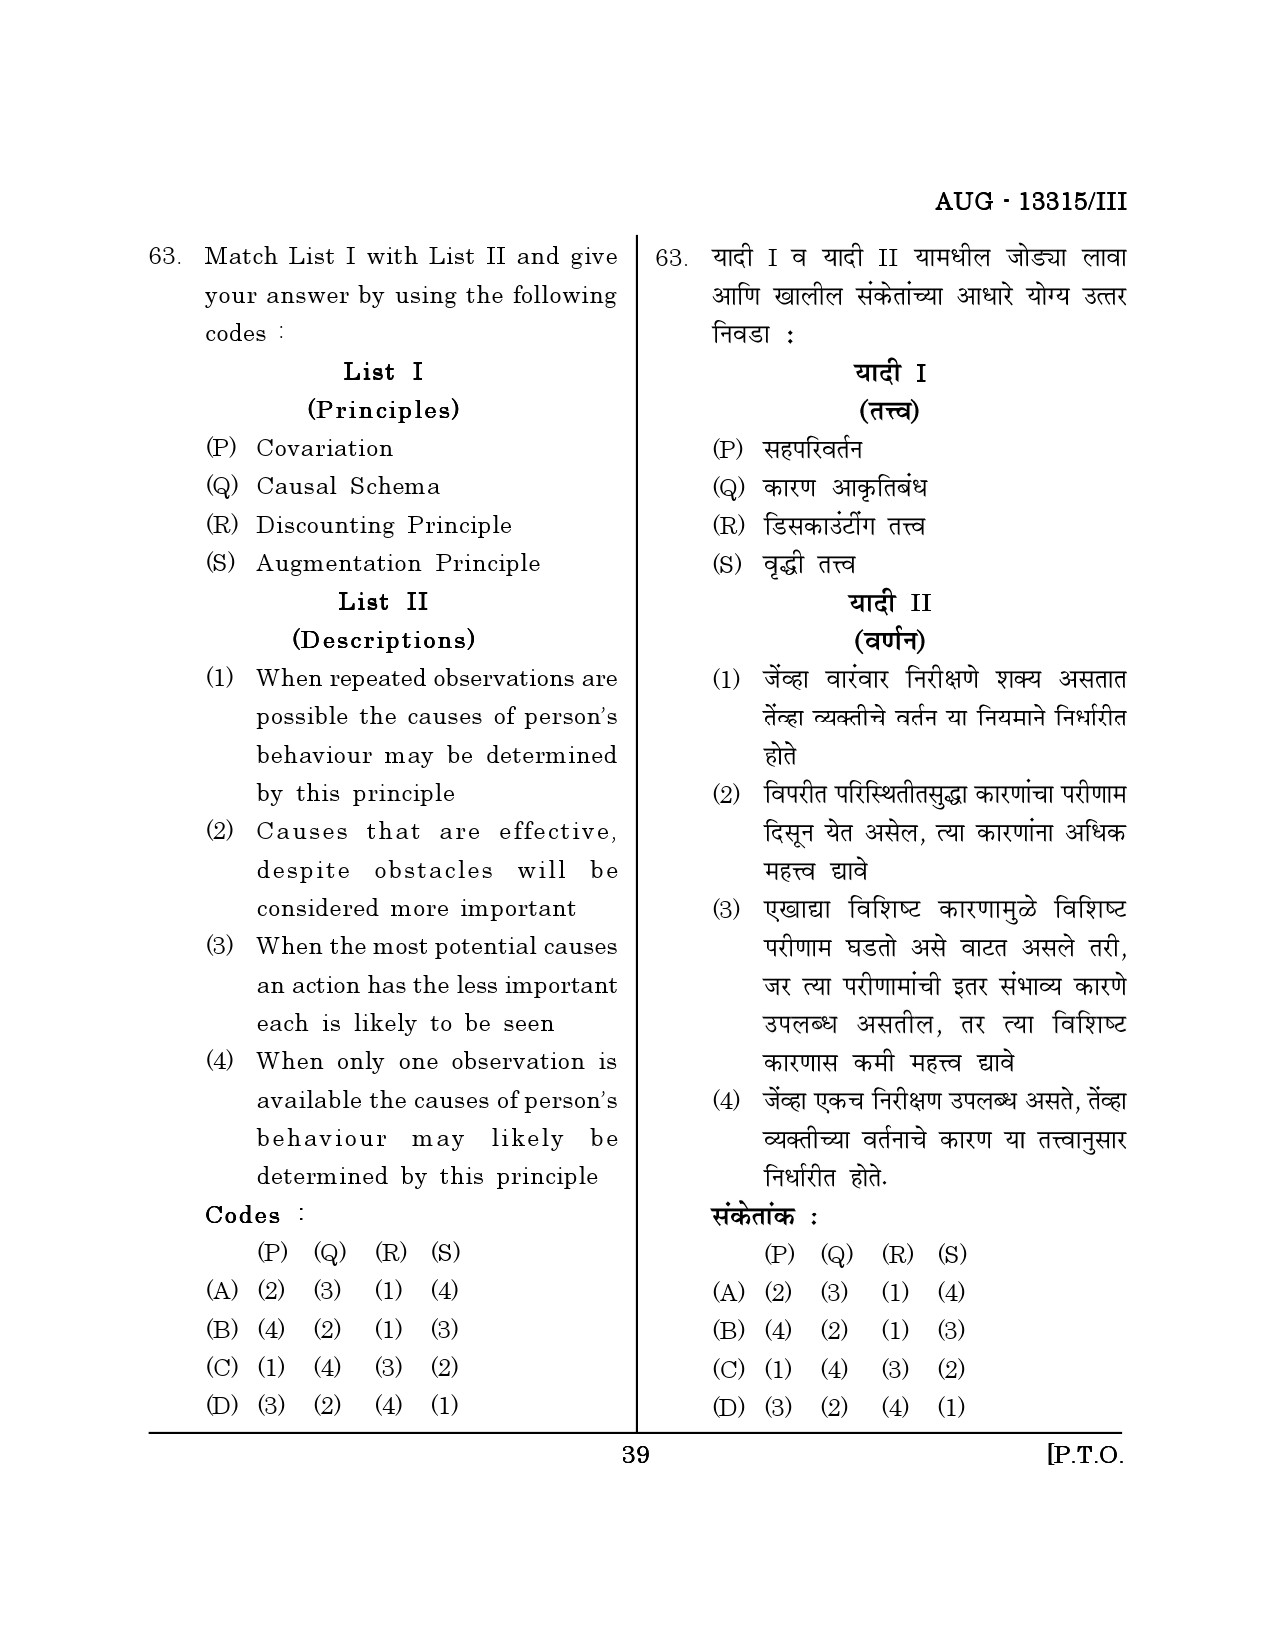 Maharashtra SET Psychology Question Paper III August 2015 38